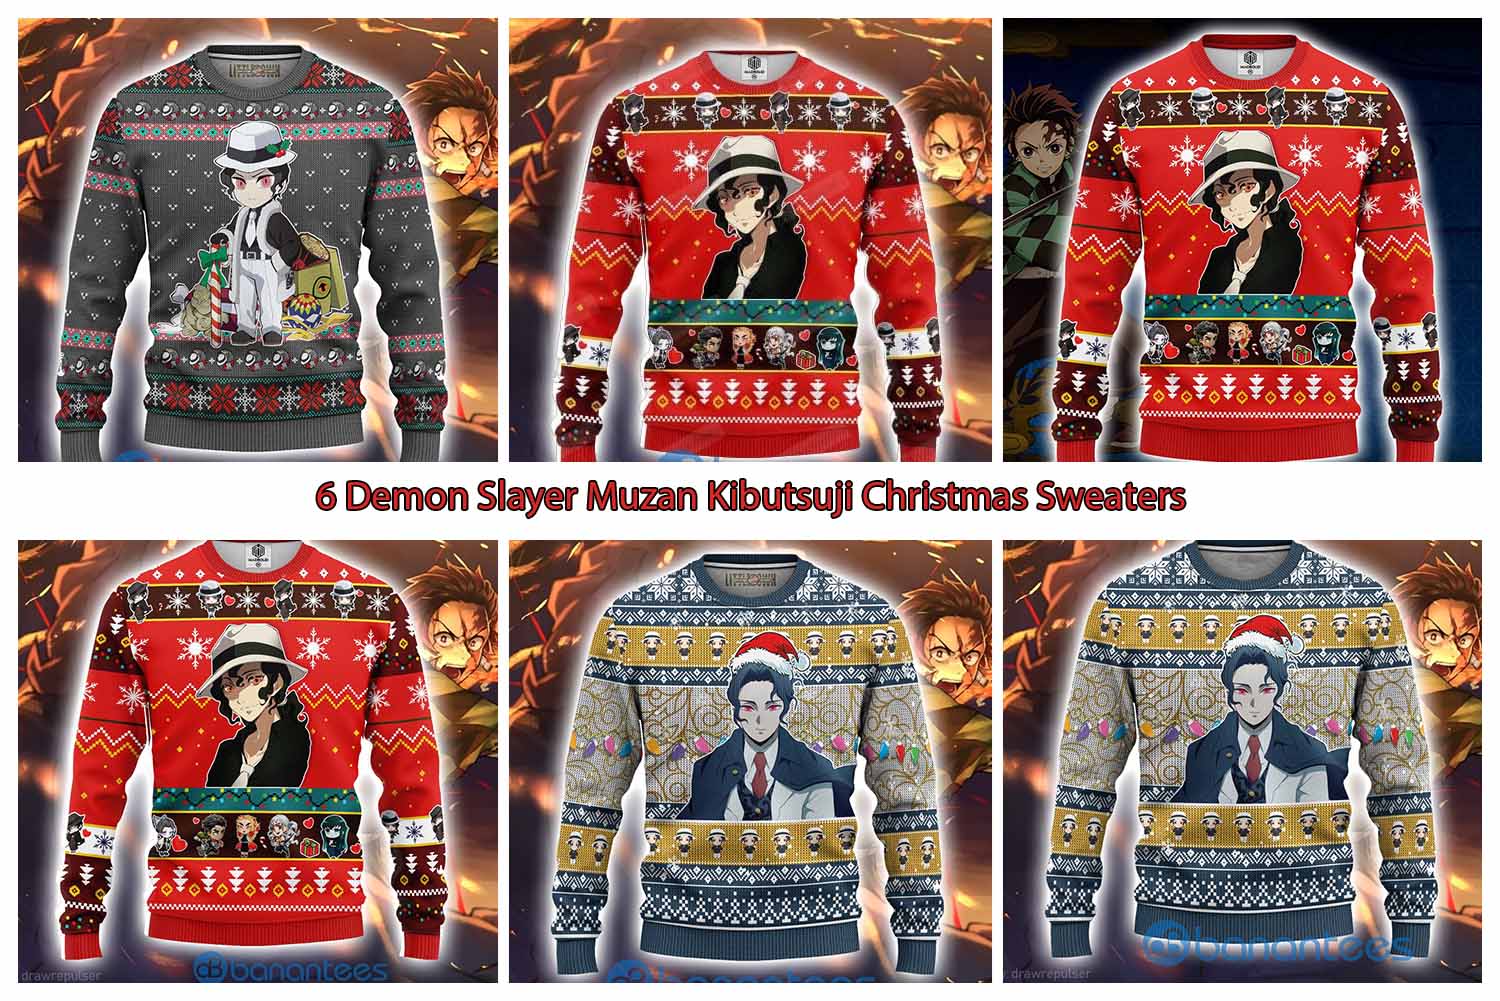 6 Demon Slayer Muzan Kibutsuji Christmas Sweaters